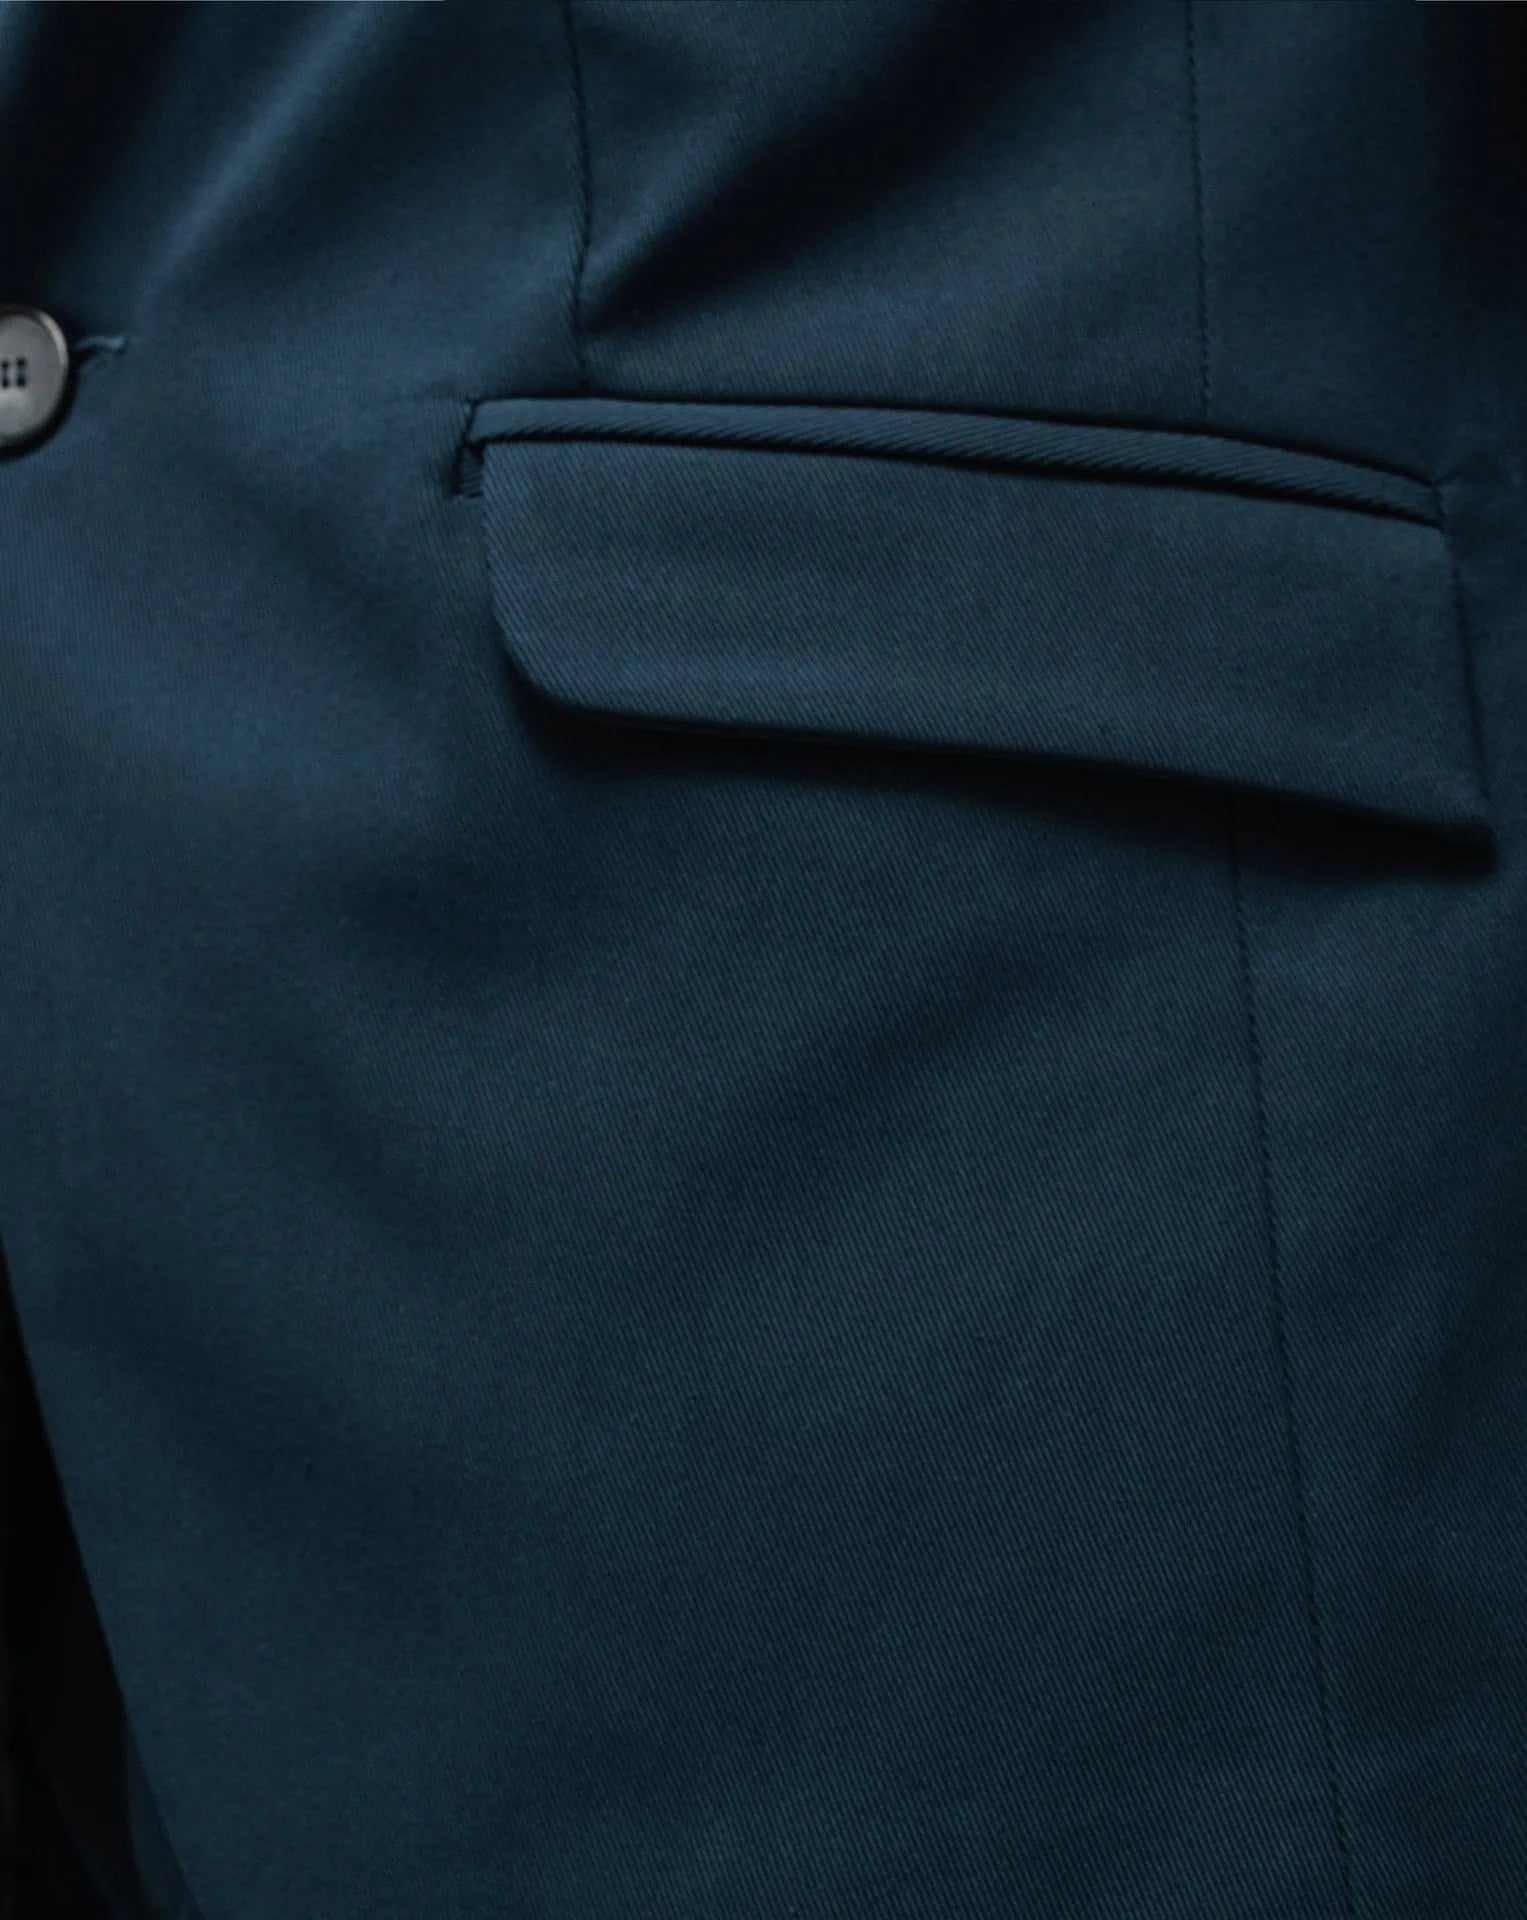 Blue One-Button Suit in Gabardine